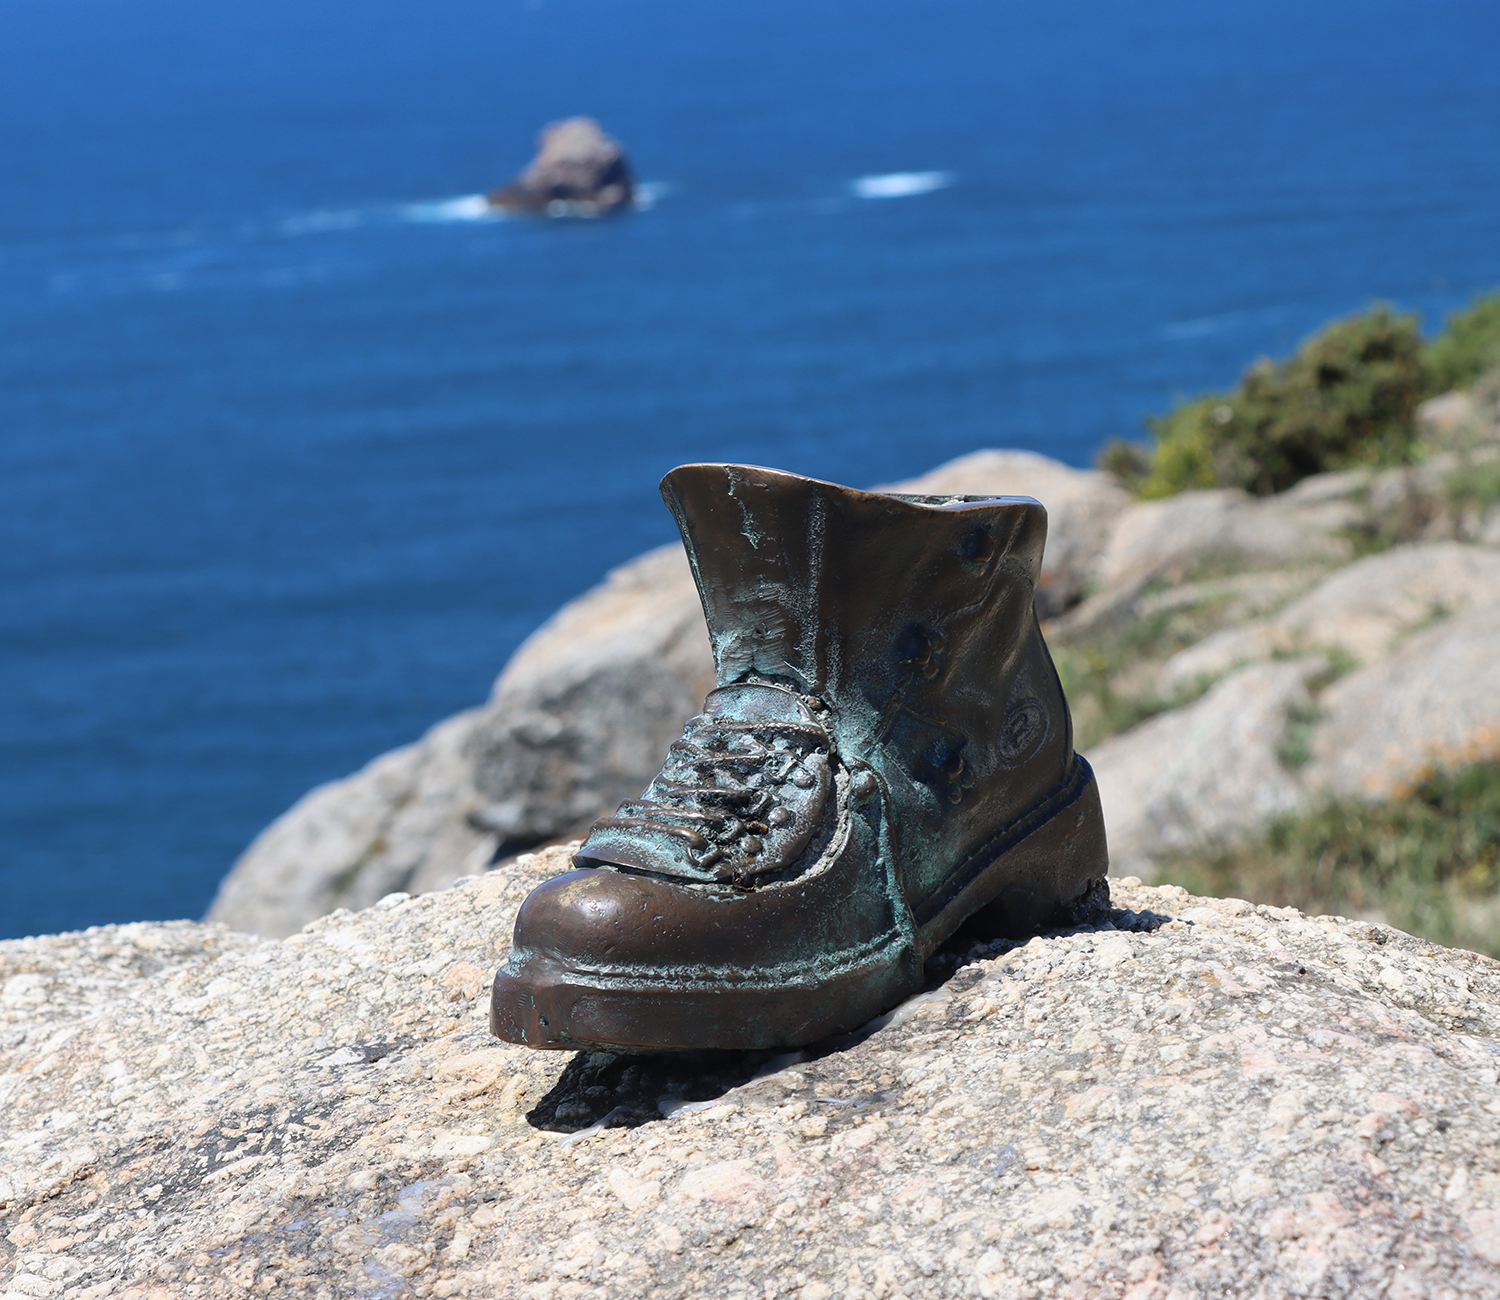 bronzed boot on stone